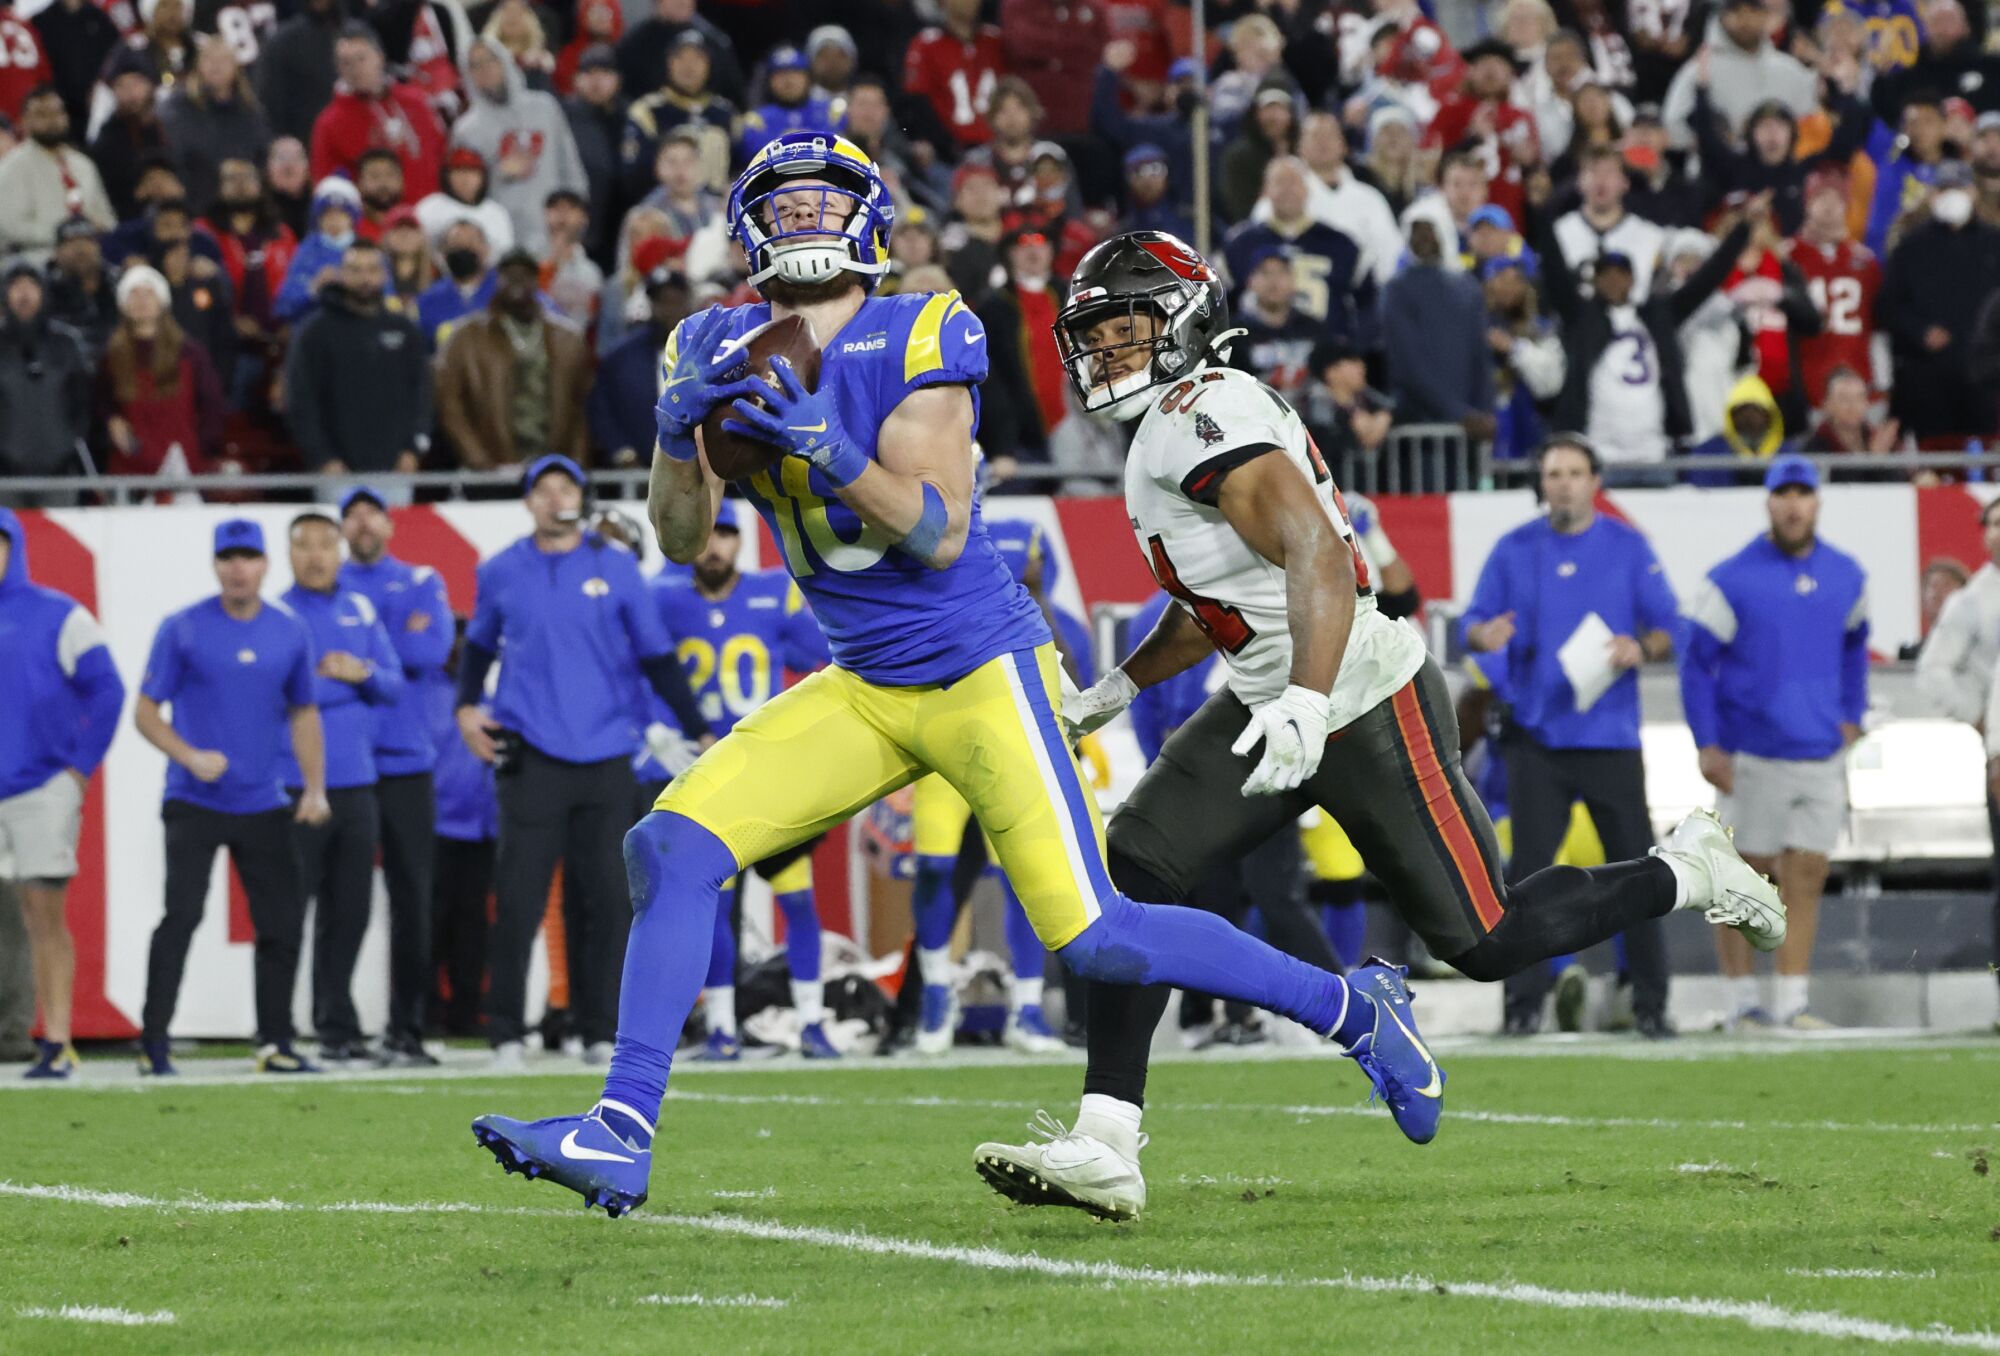  Rams wide receiver Cooper Kupp hauls in a catch against Buccaneers cornerback Carlton Davis.